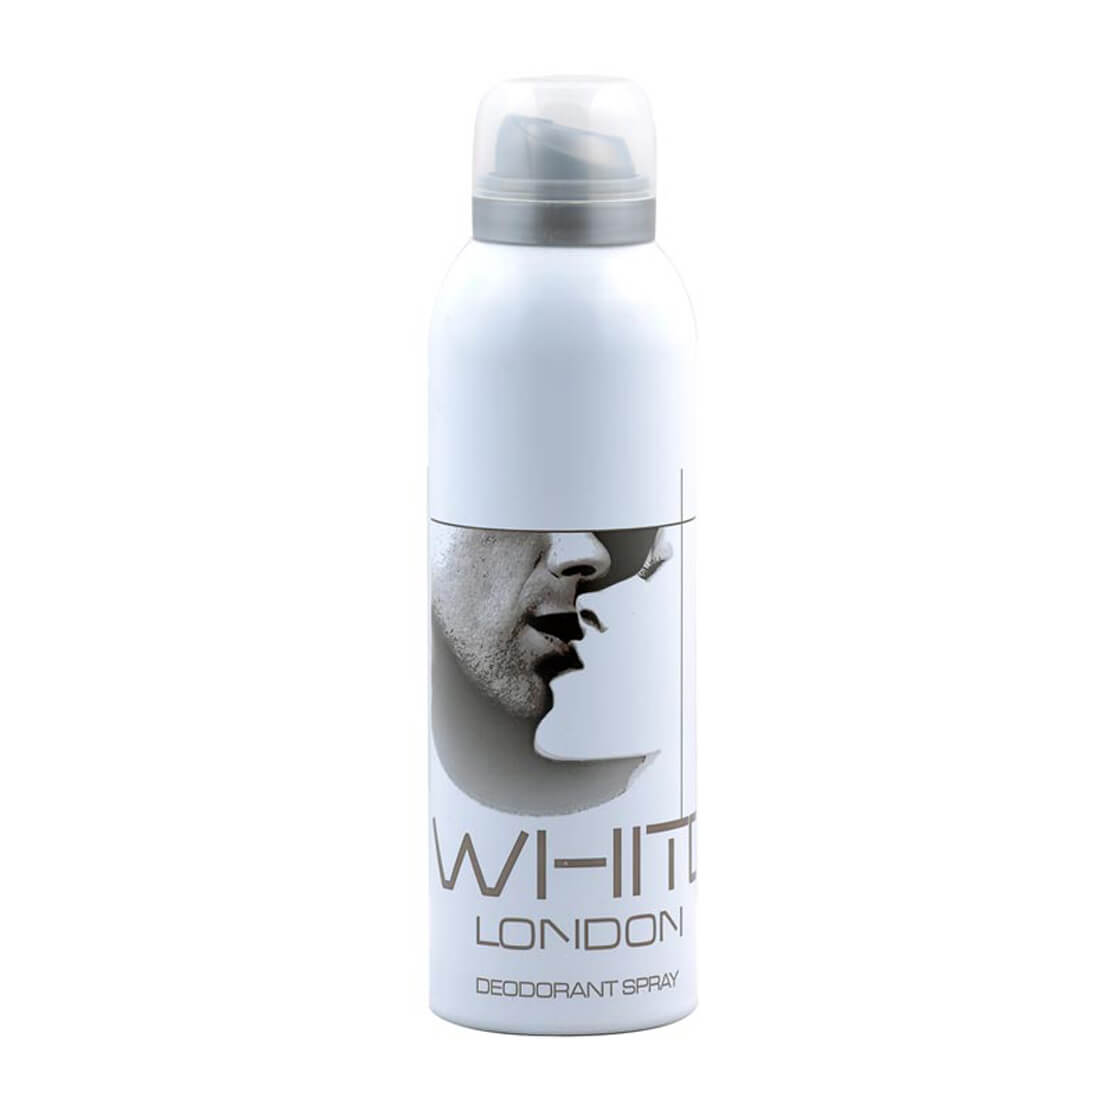 London White Deodorant Body Spray Pack of 2 x 200ml